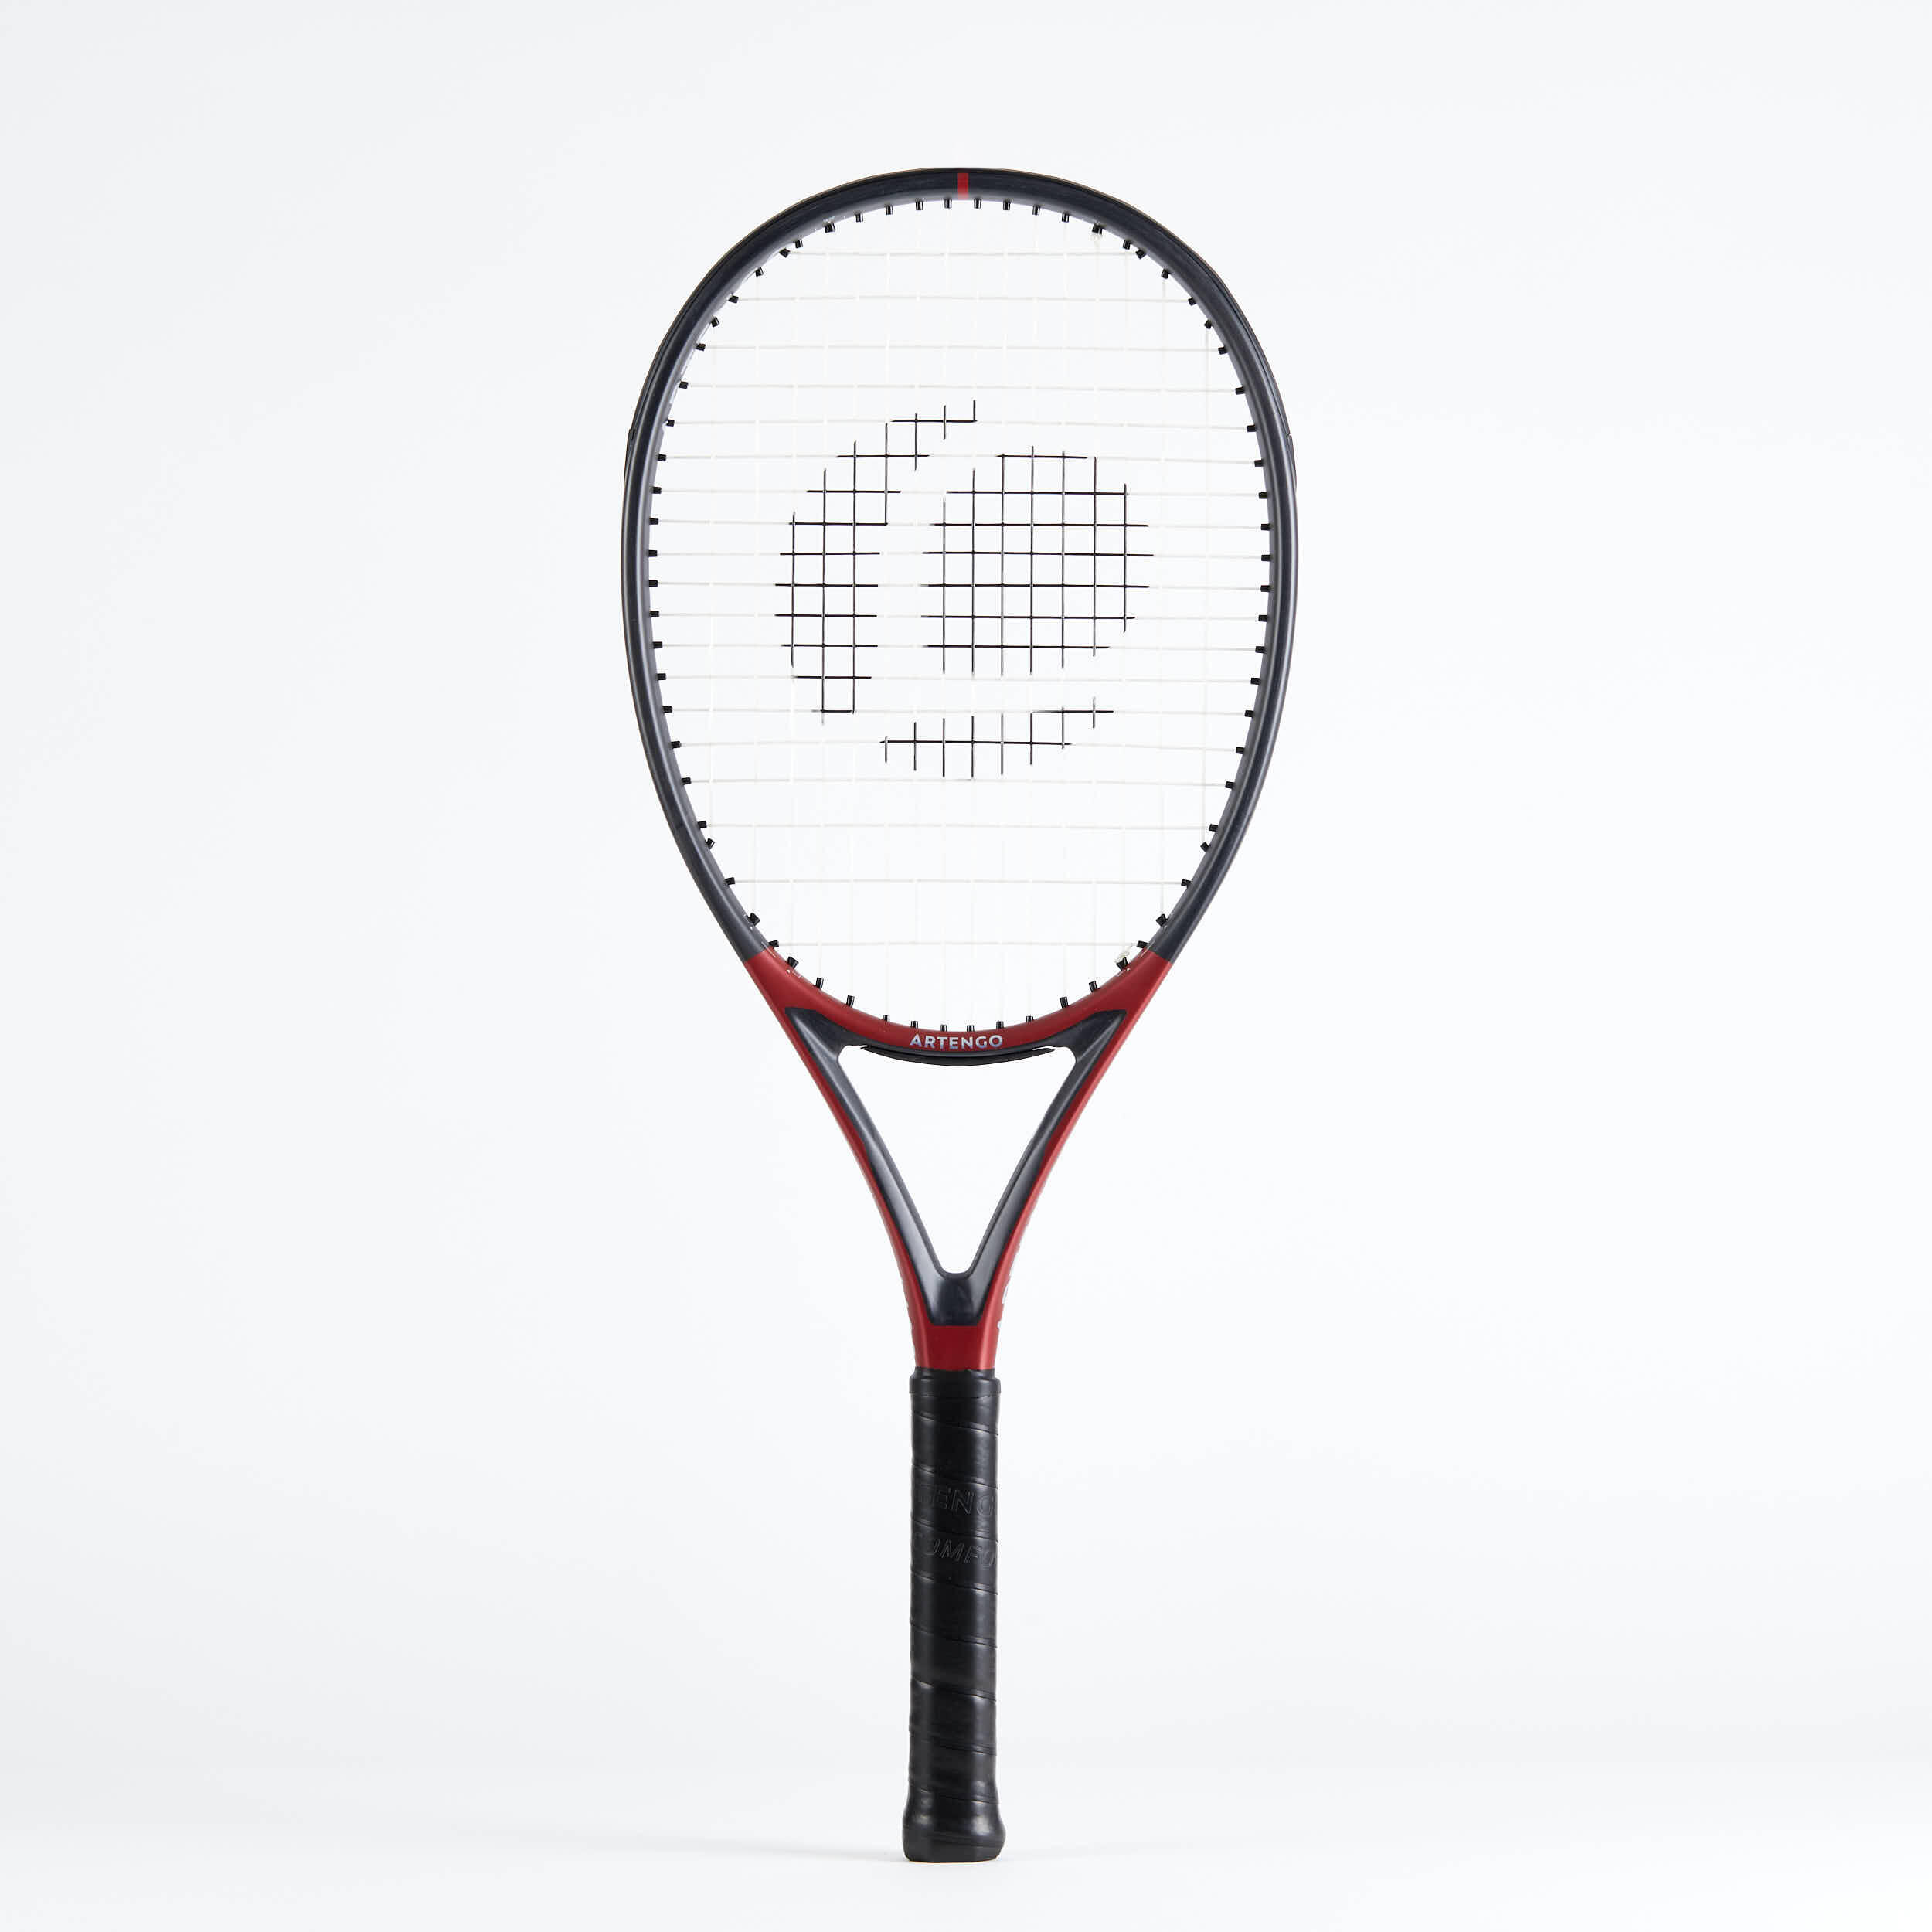 Tennisschläger Erwachsene - Softfeel 107 schwarz/rot